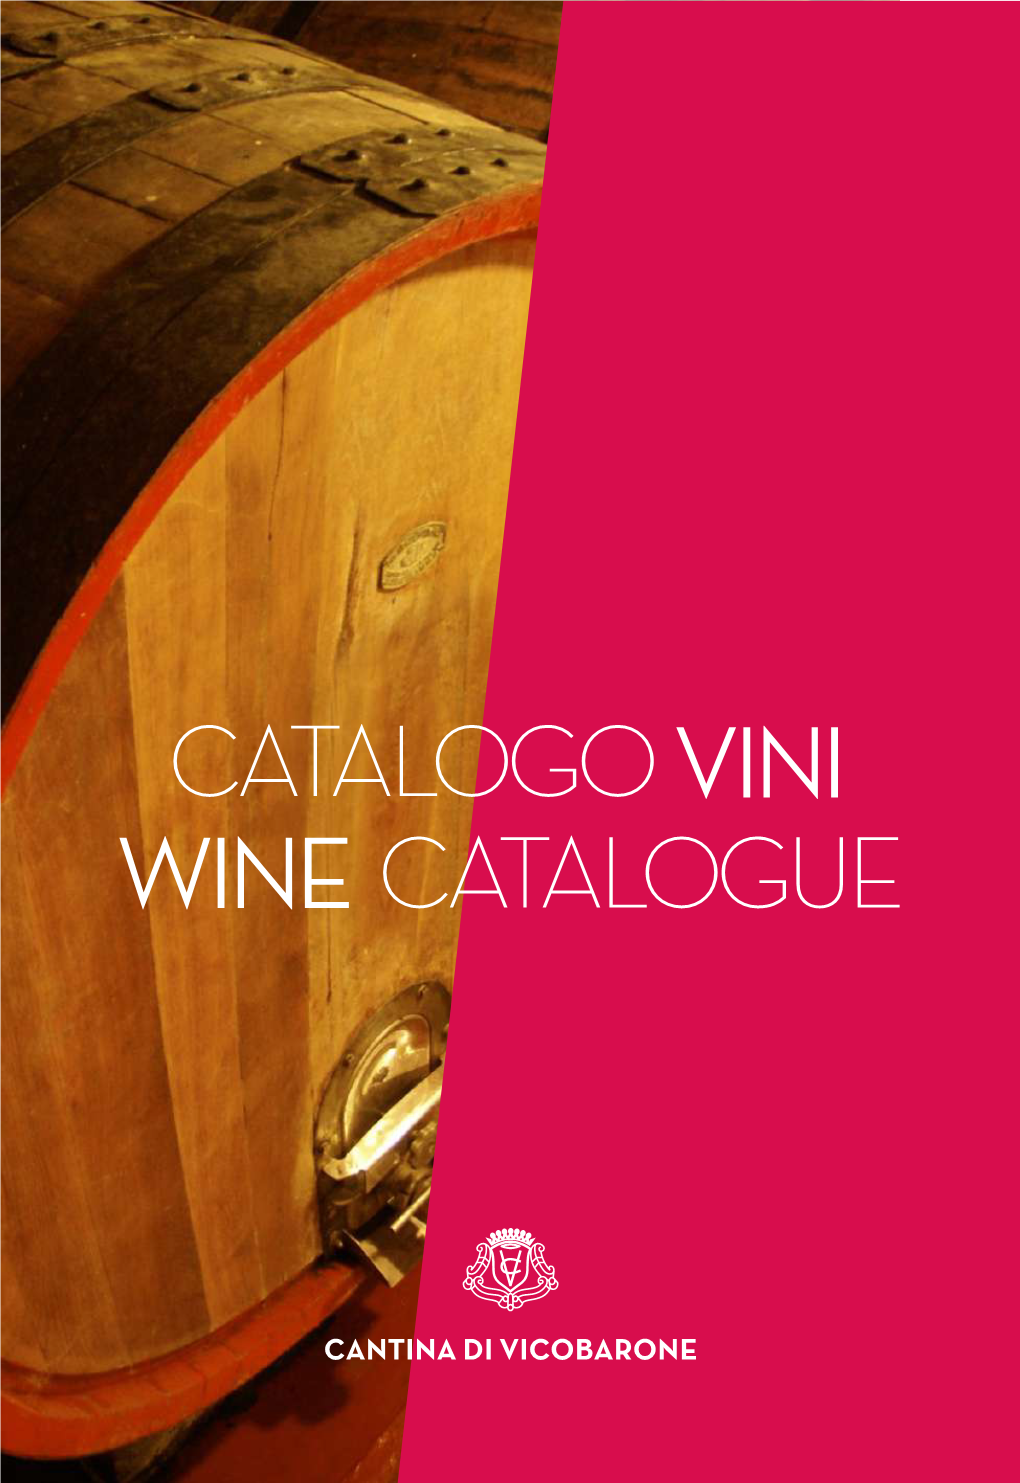 Catalogovini Wine Catalogue